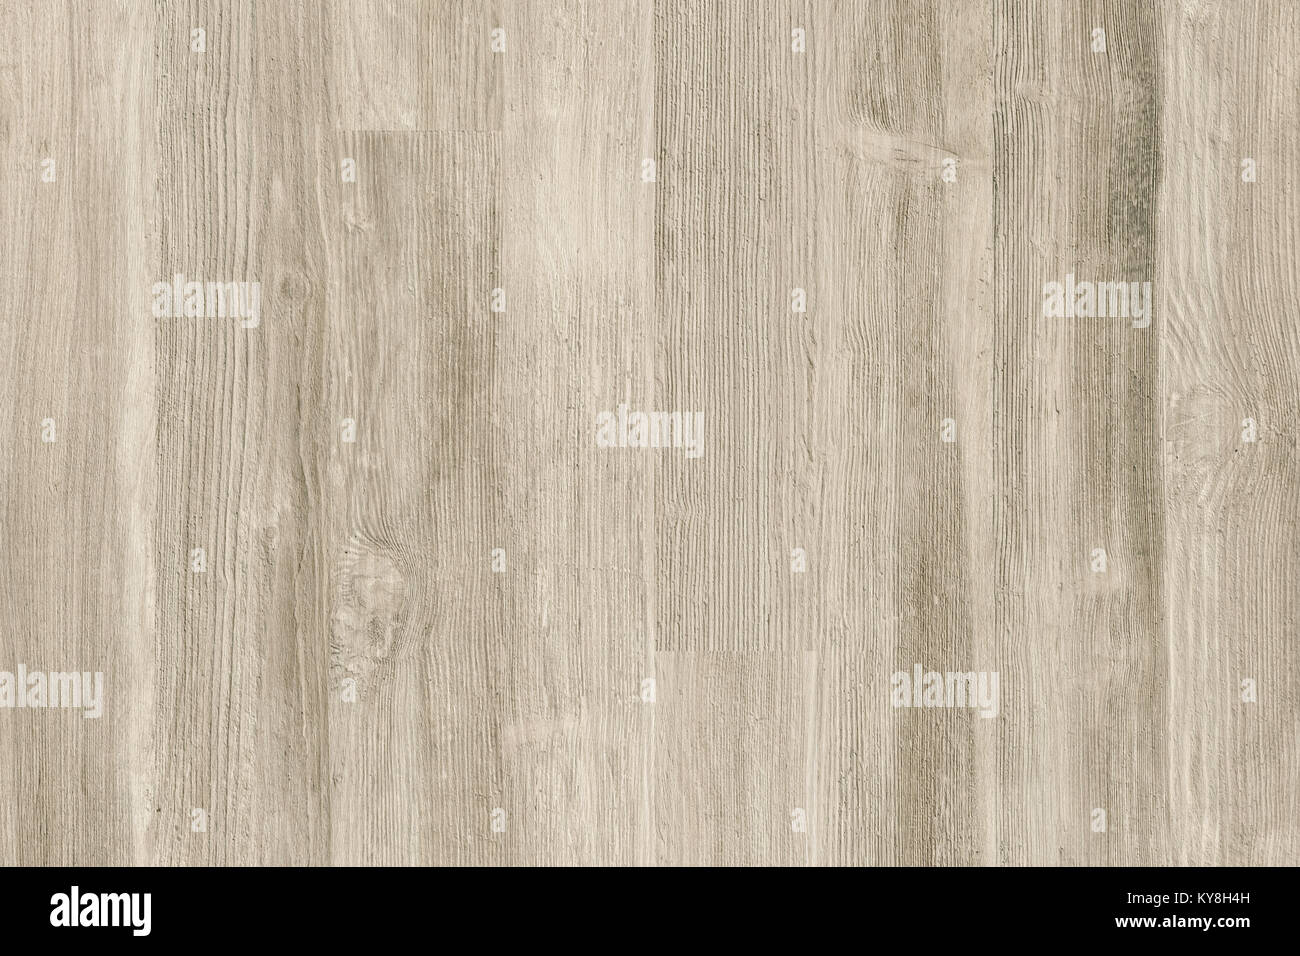 Light grunge wood panels. Planks Background. old wall wooden floor vintage Stock Photo